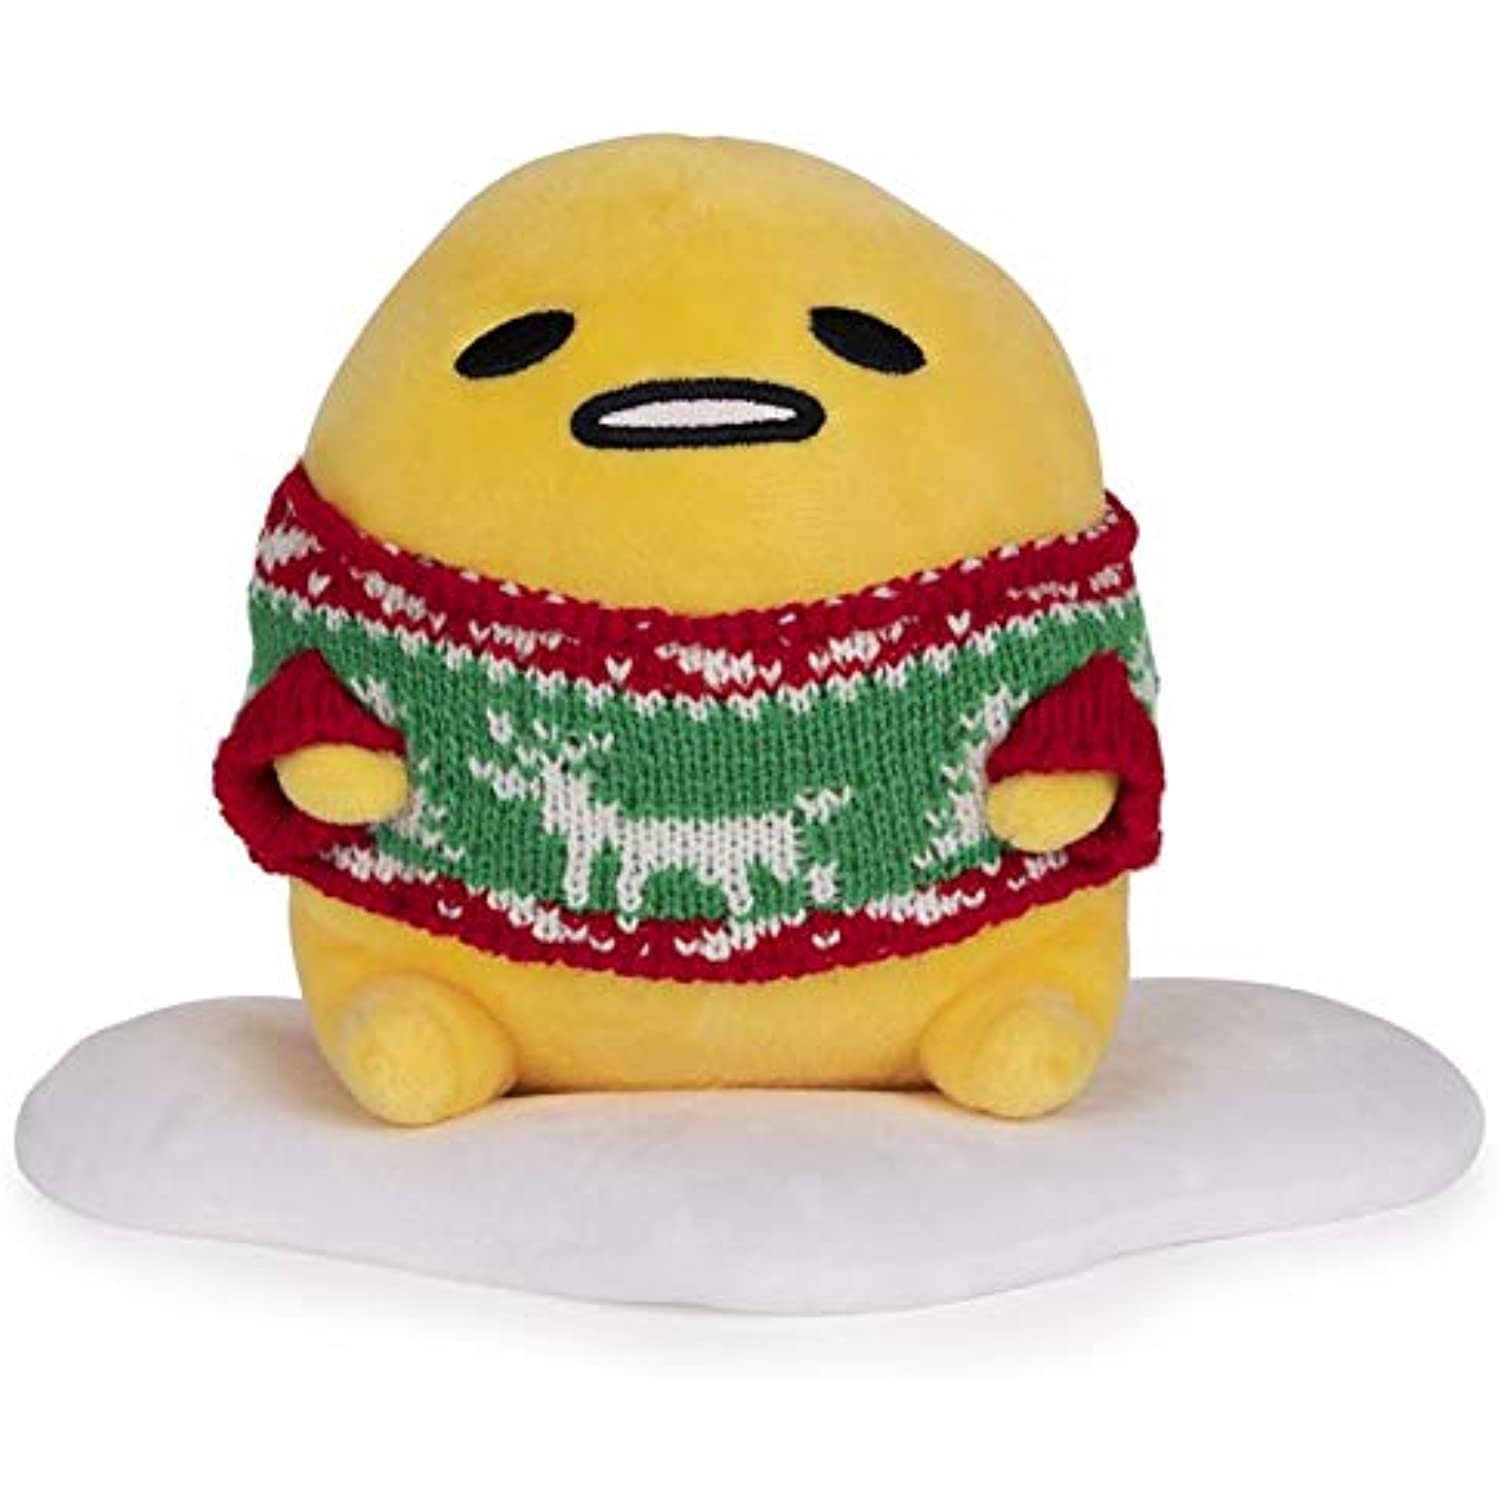 GUND Sanrio Gudetama The Lazy Egg Ugly Holiday Sweater Plush Stuffed Animal, 6"